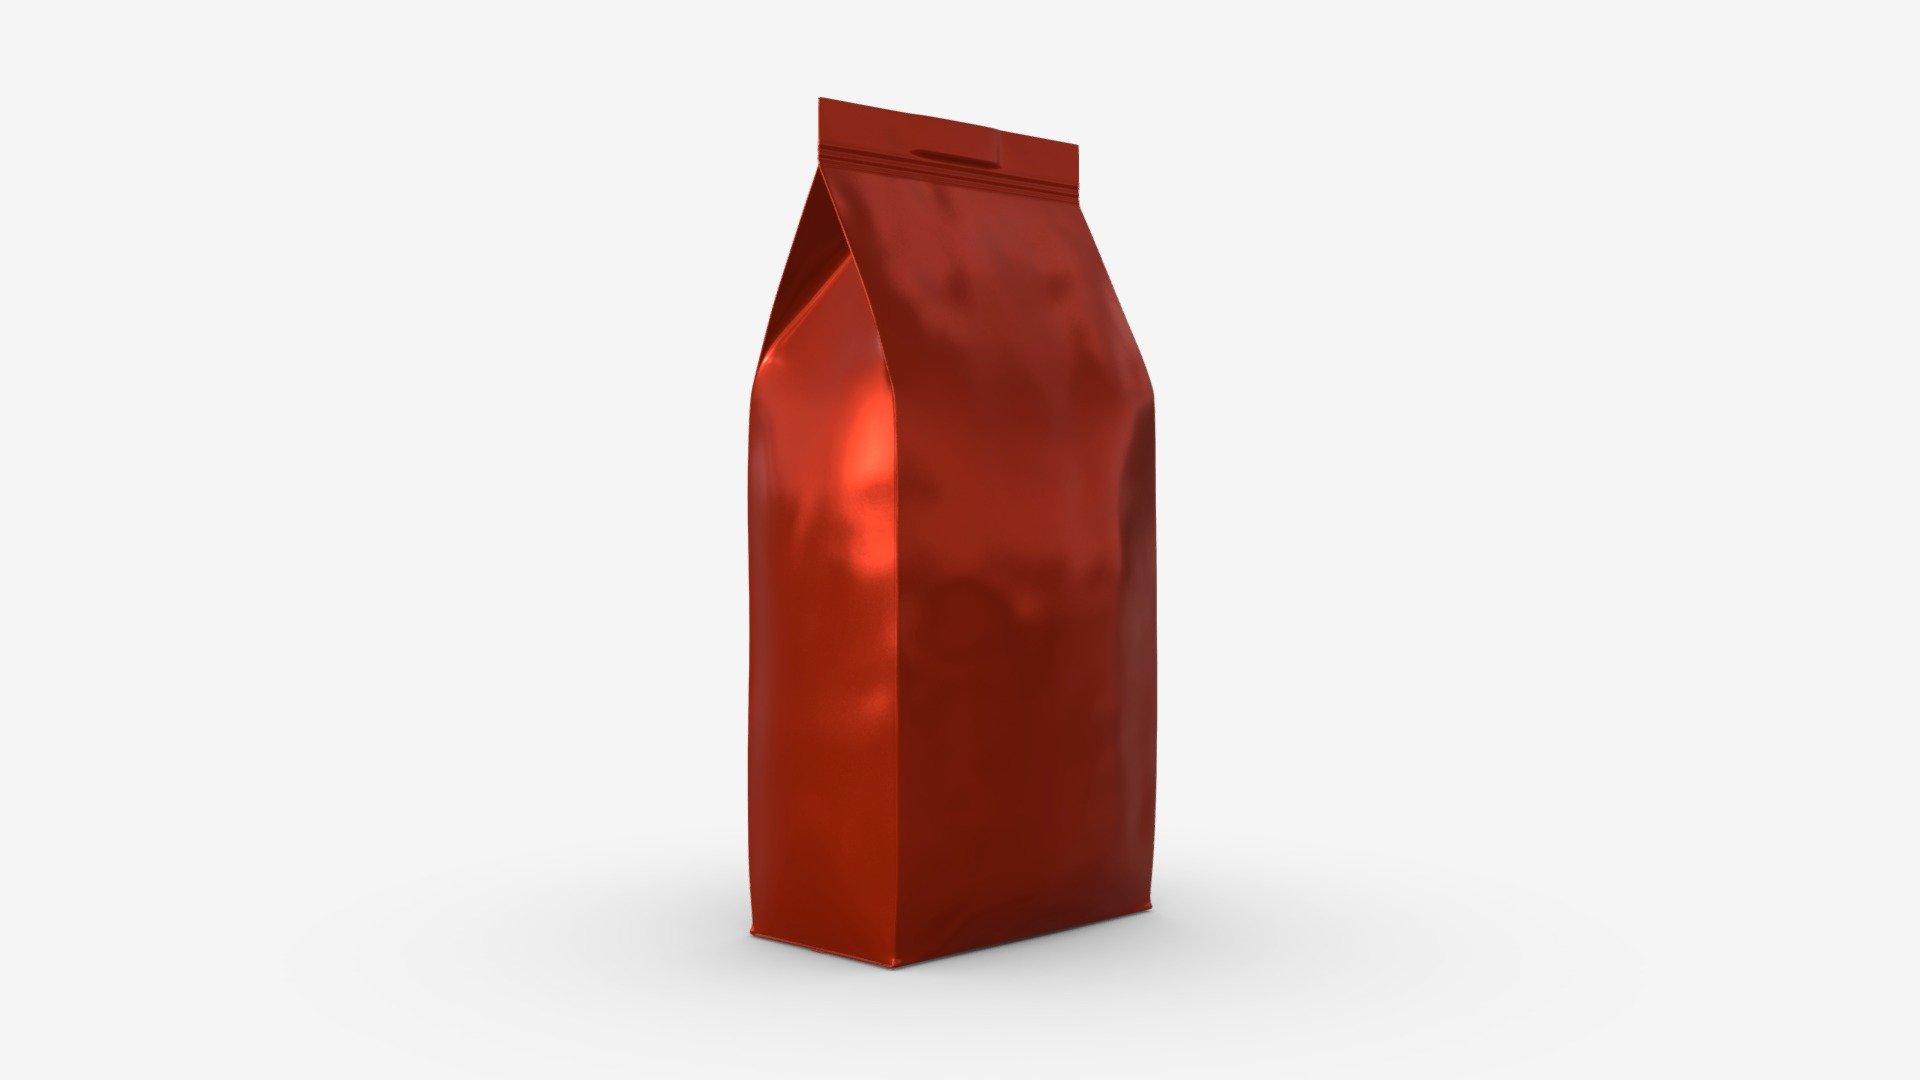 Coffee Bag Medium Buy Royalty Free 3d Model By Hq3dmod Aivisastics